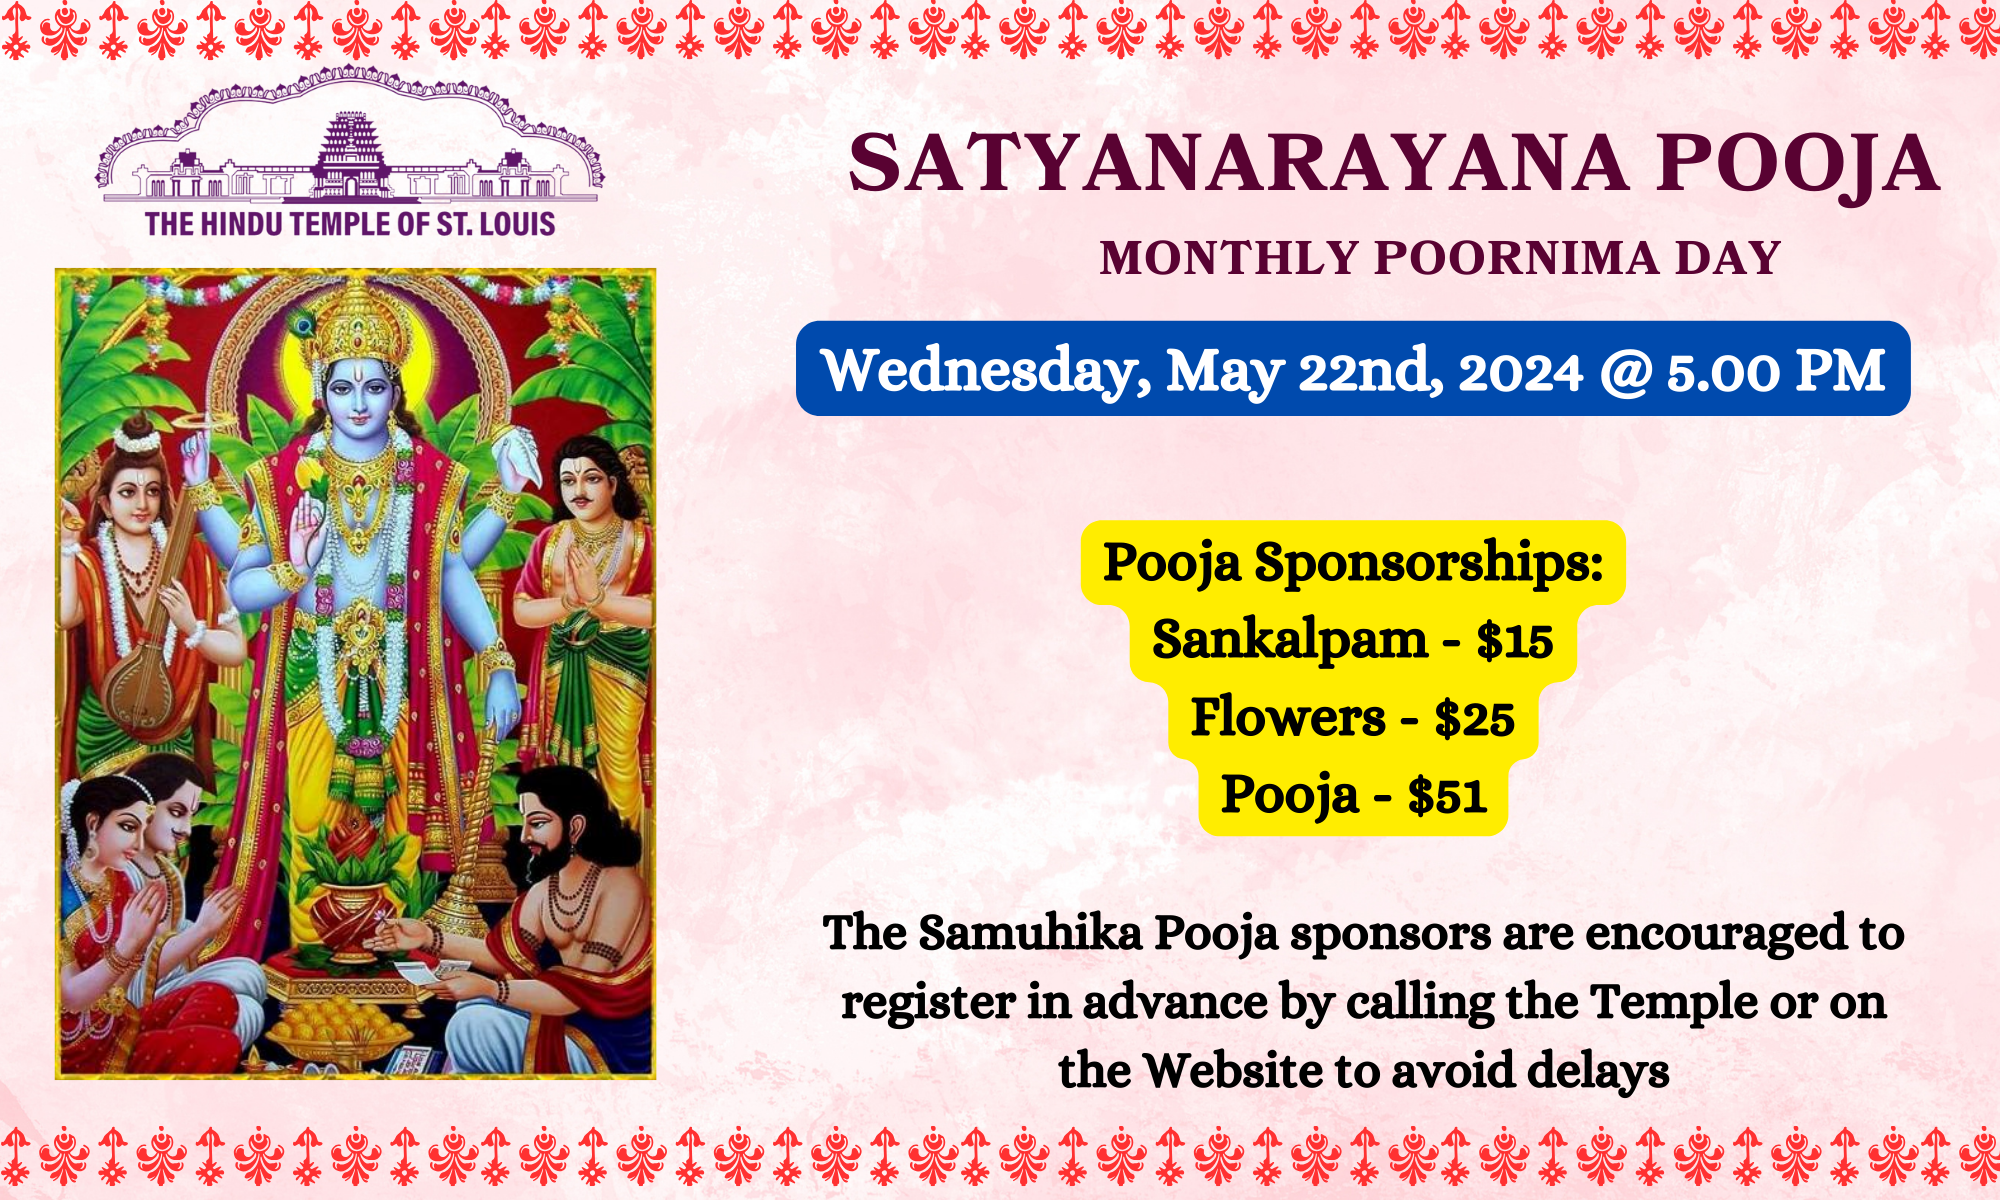 Sri Satyanarayana Pooja – 05/22 @ 5:00 PM